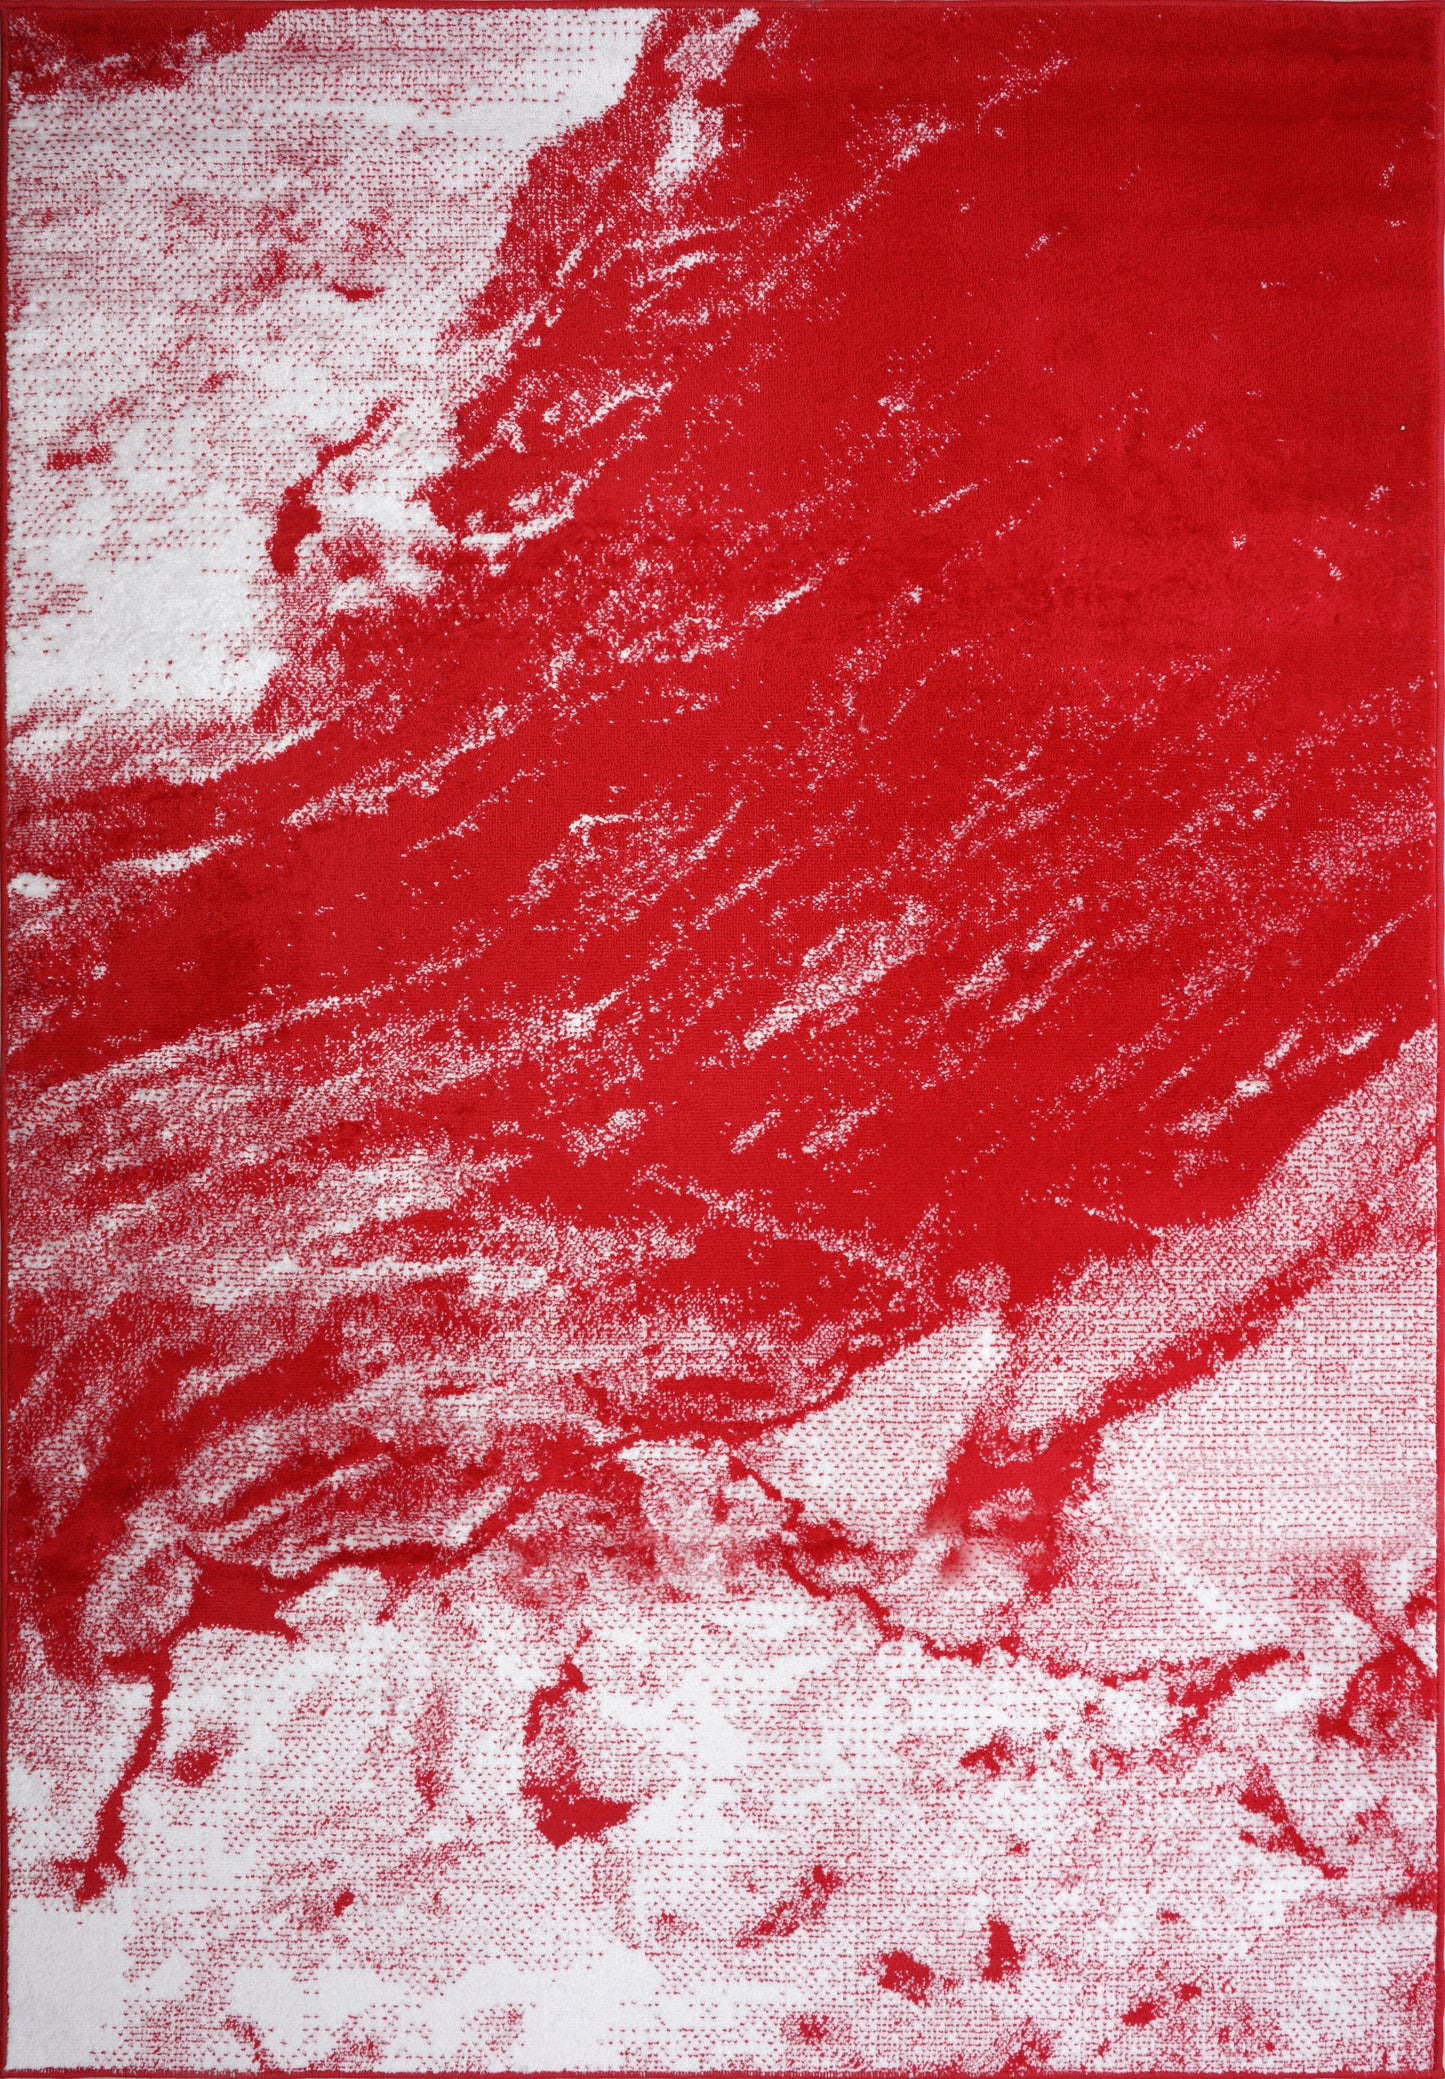 calvin red black abstract area rug 2x3 Doormat, Entrance, Balcony, Bathroom, Washroom